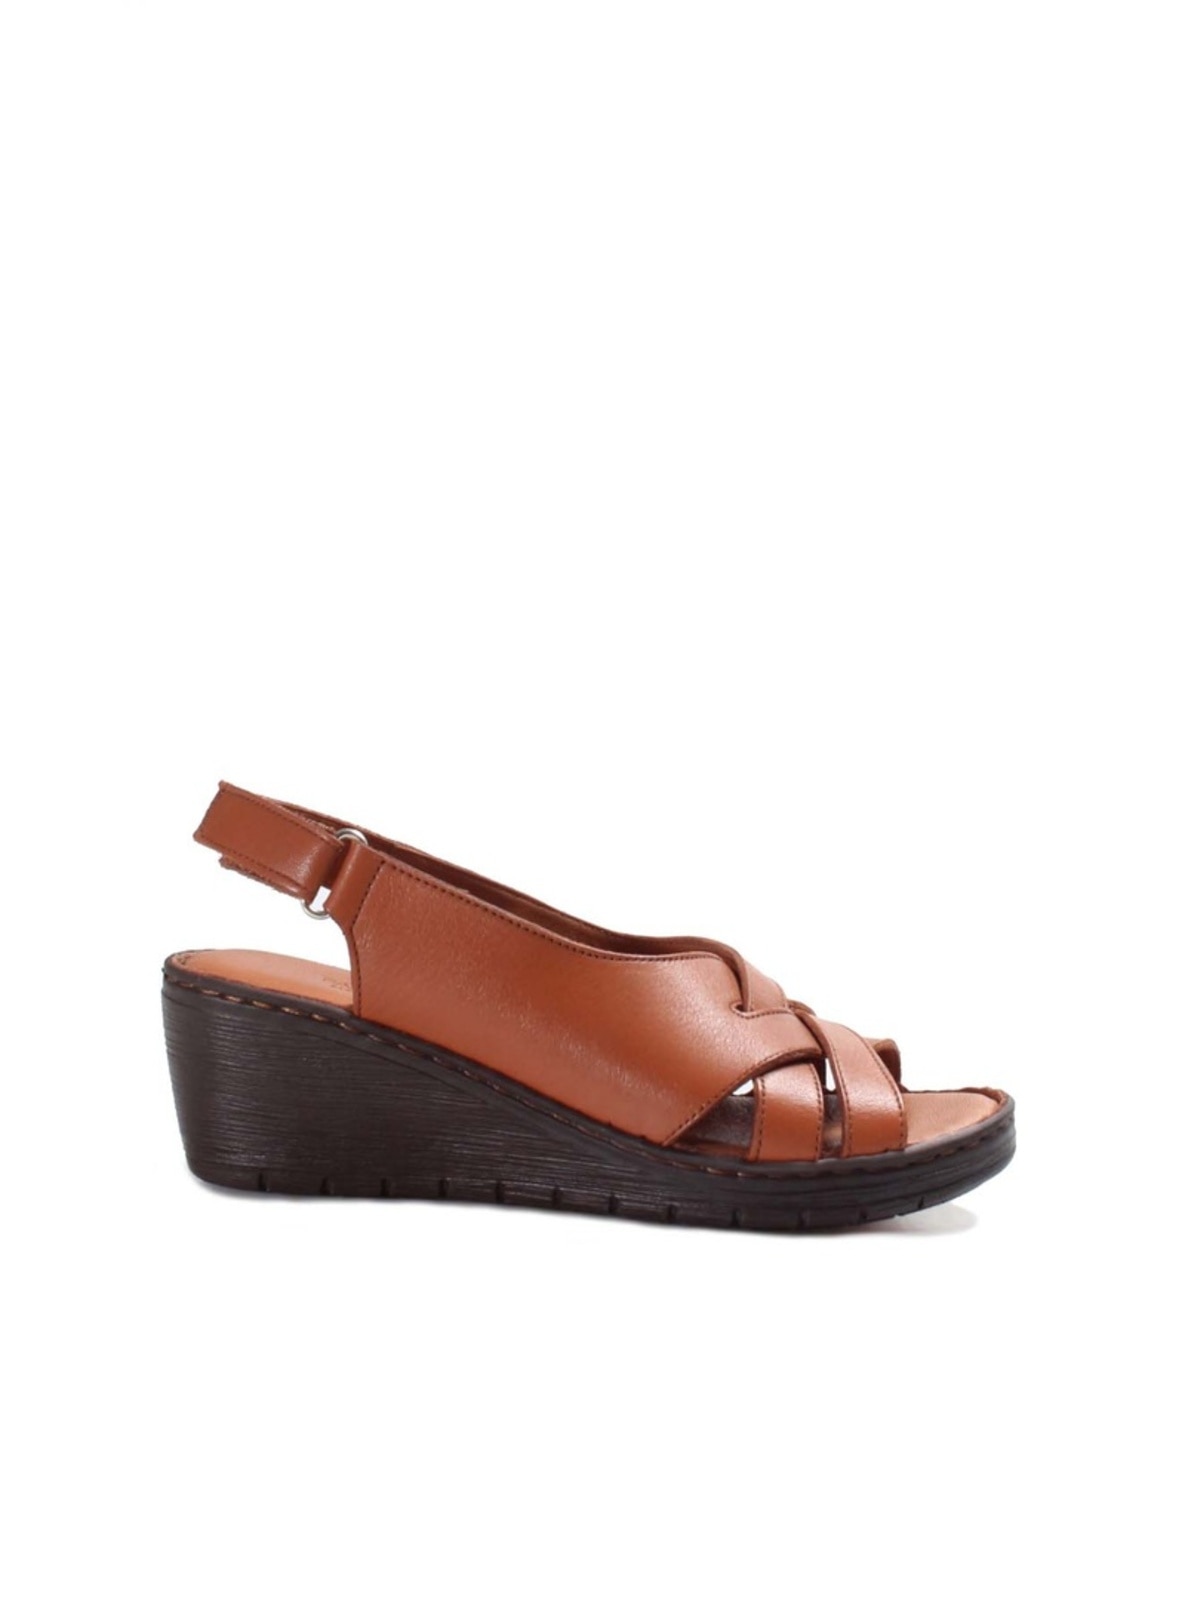 Genuine Leather Women's Classic Sandals 952Za821 Tan